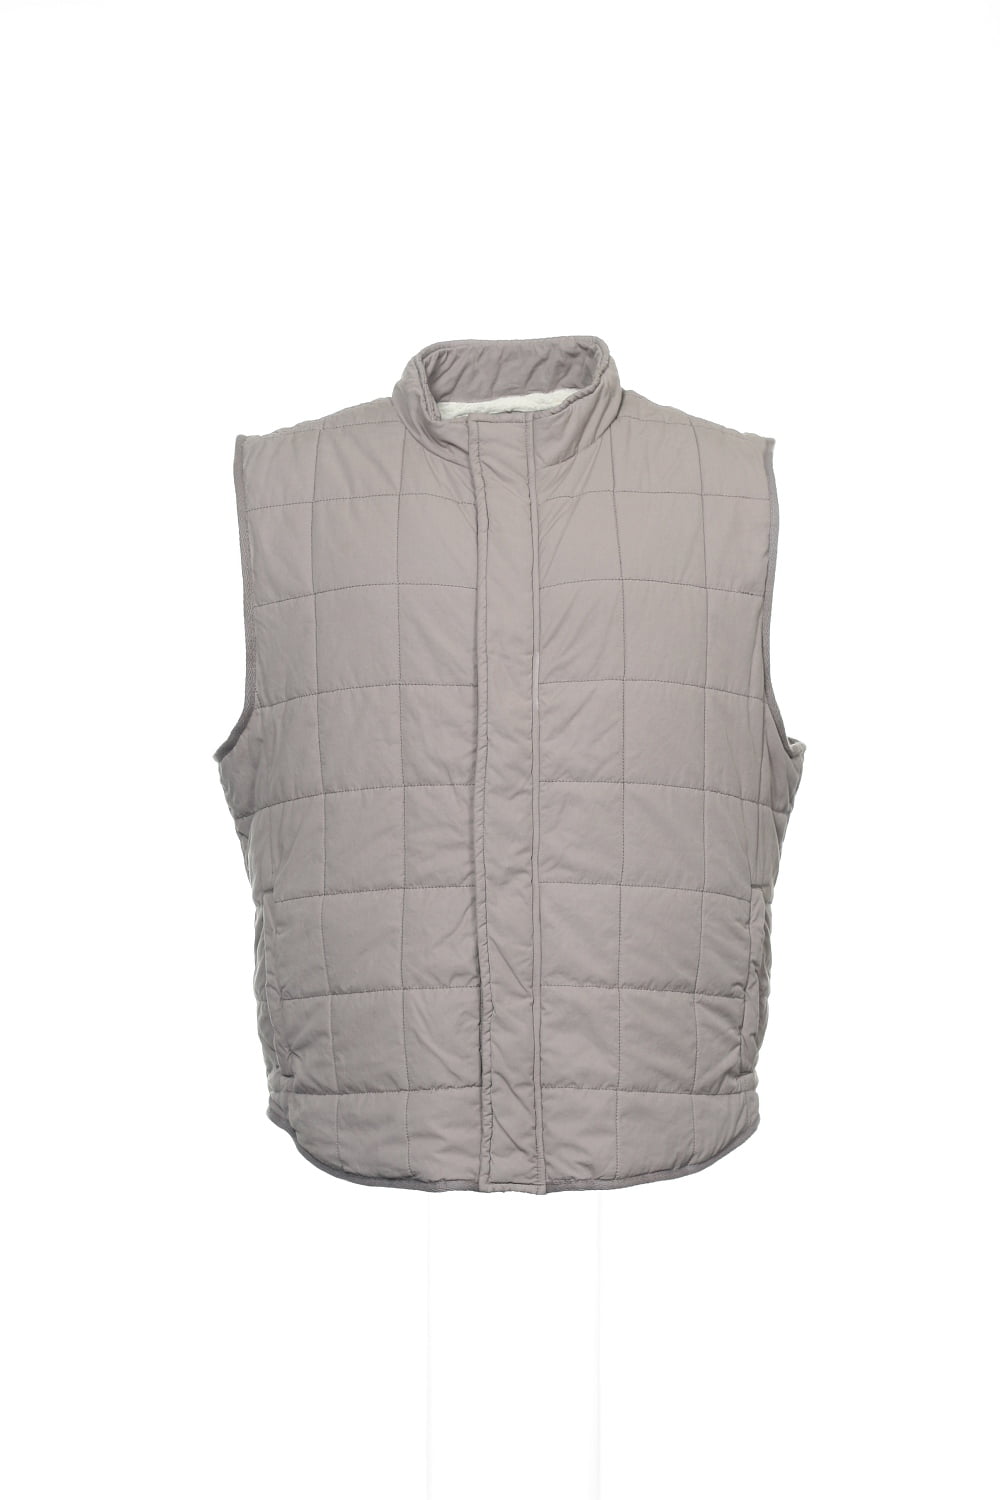 Splendid Mills Gray Puffy Vest Puffer , Size 2XLarge - Walmart.com